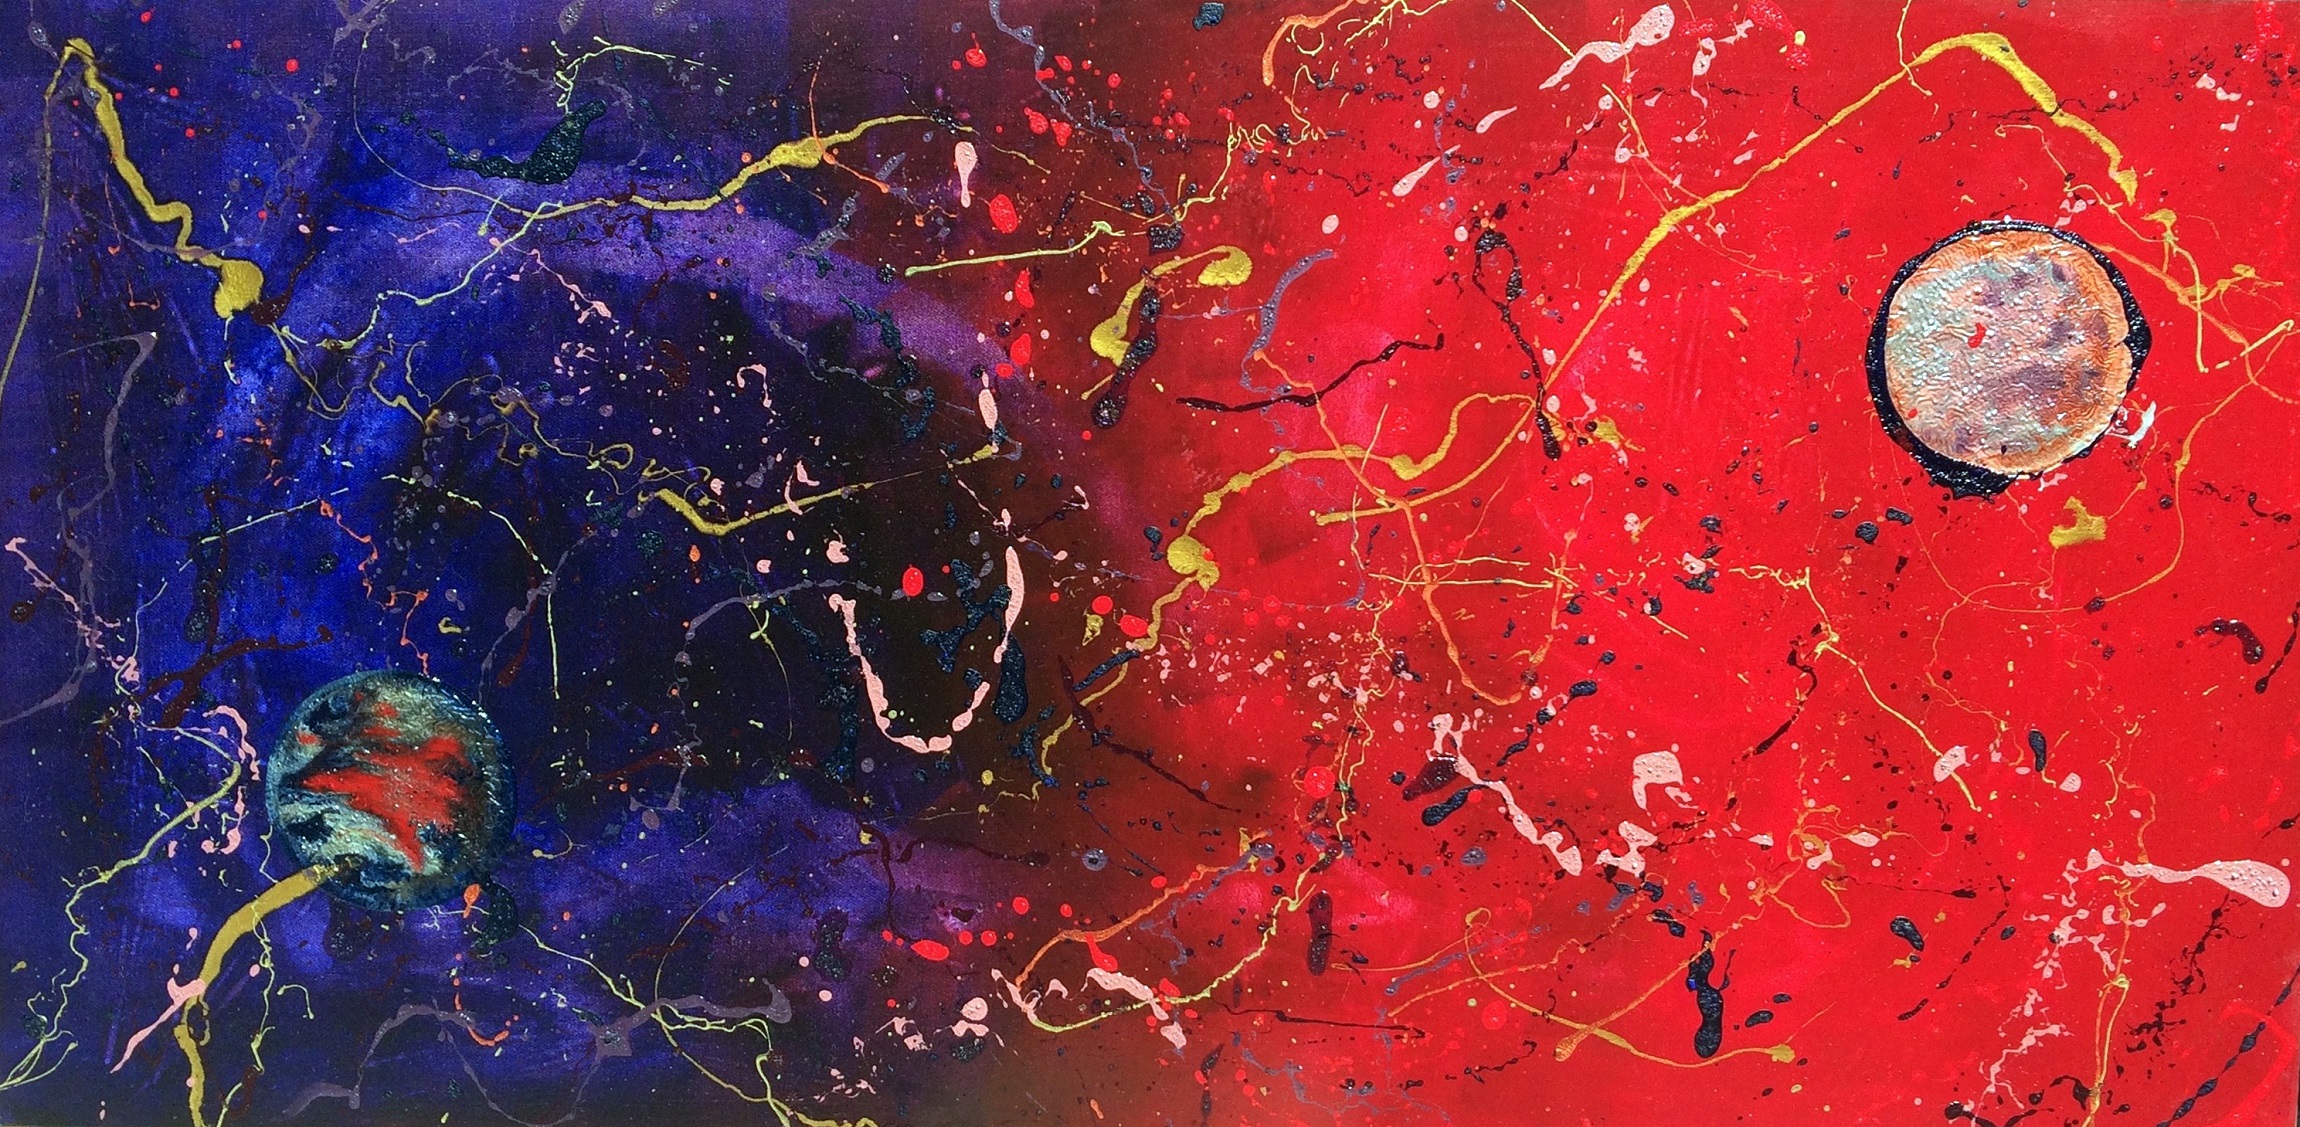 Universe III, 200x100cm, pigments/oil/graphite on linen, 2015